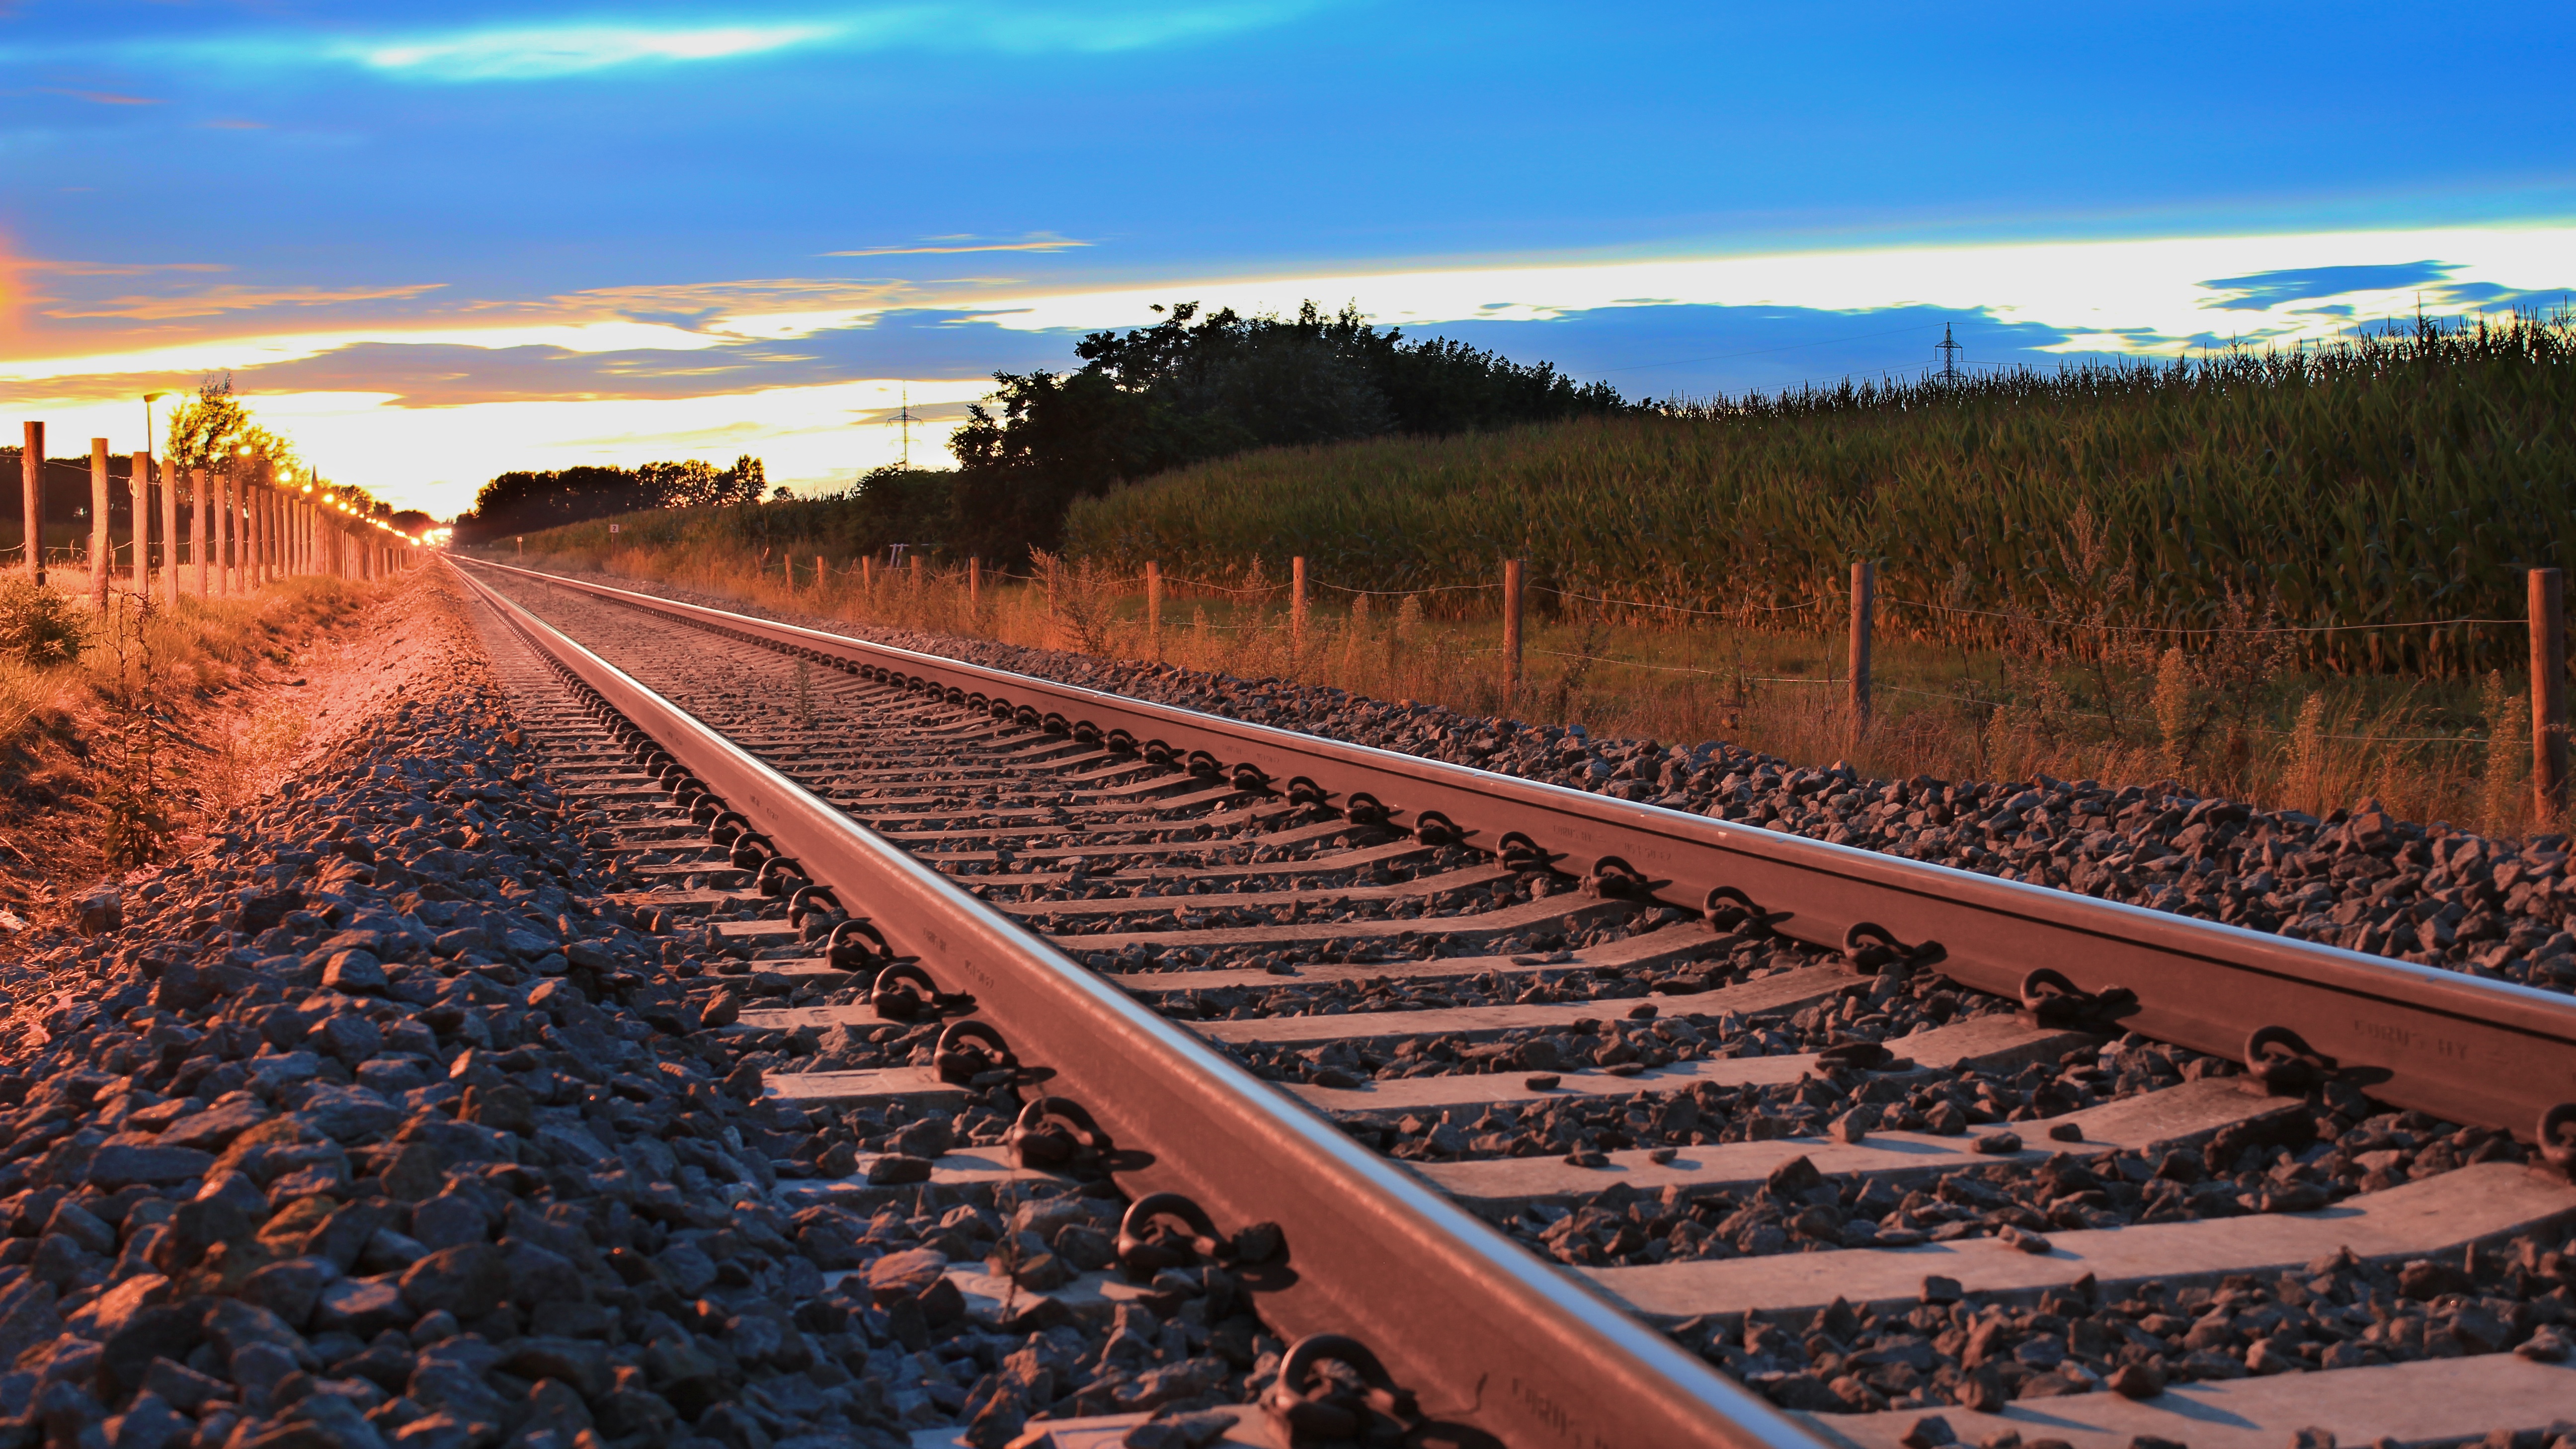 Sunset Railway by micfoto on DeviantArt